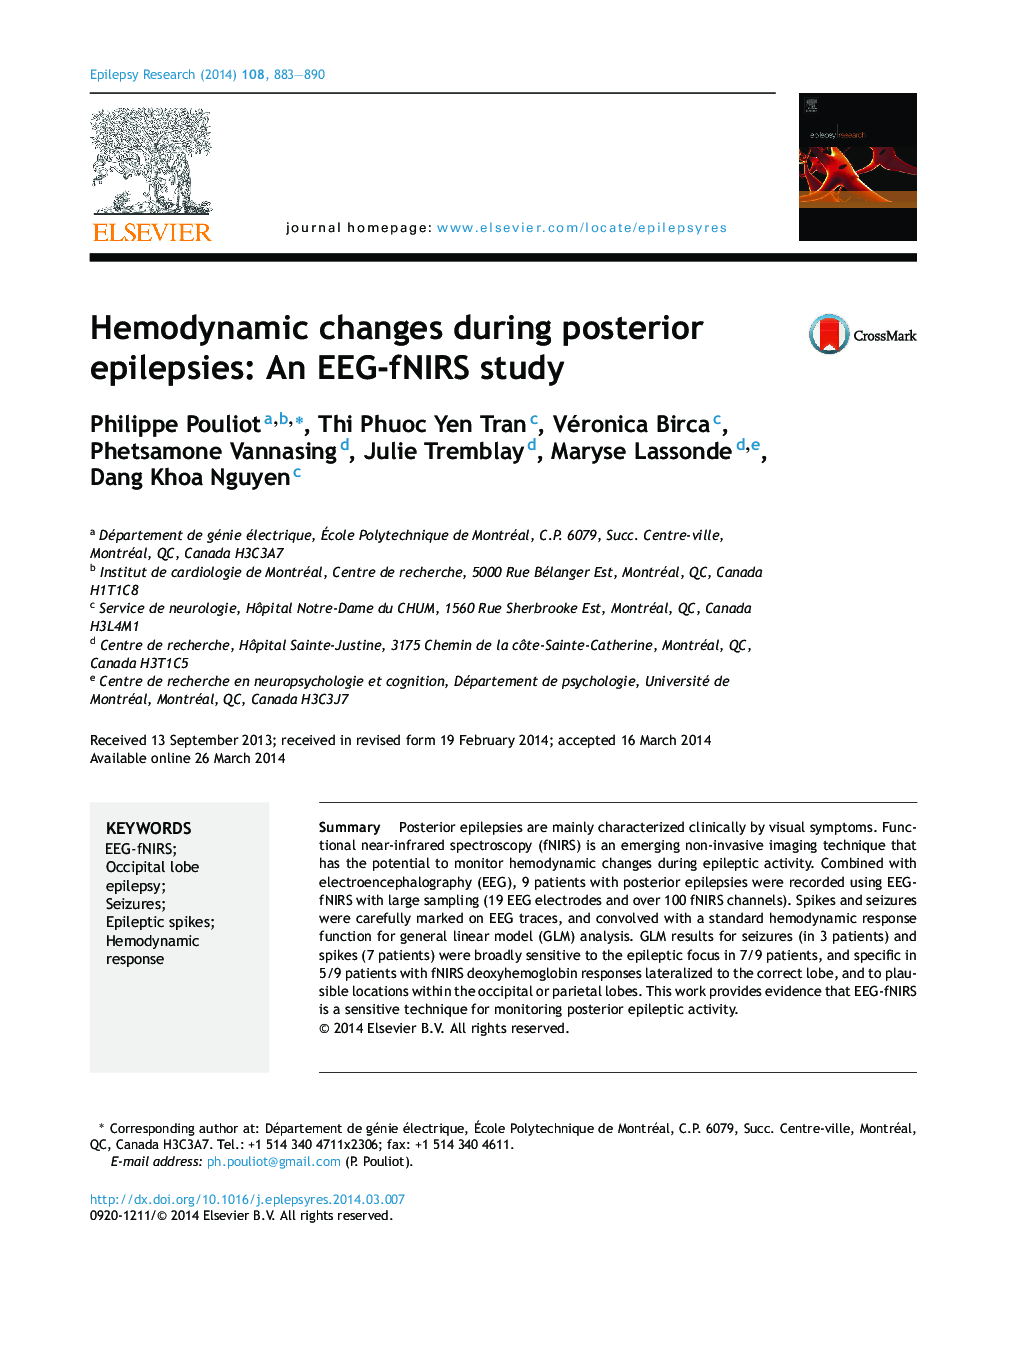 Hemodynamic changes during posterior epilepsies: An EEG-fNIRS study